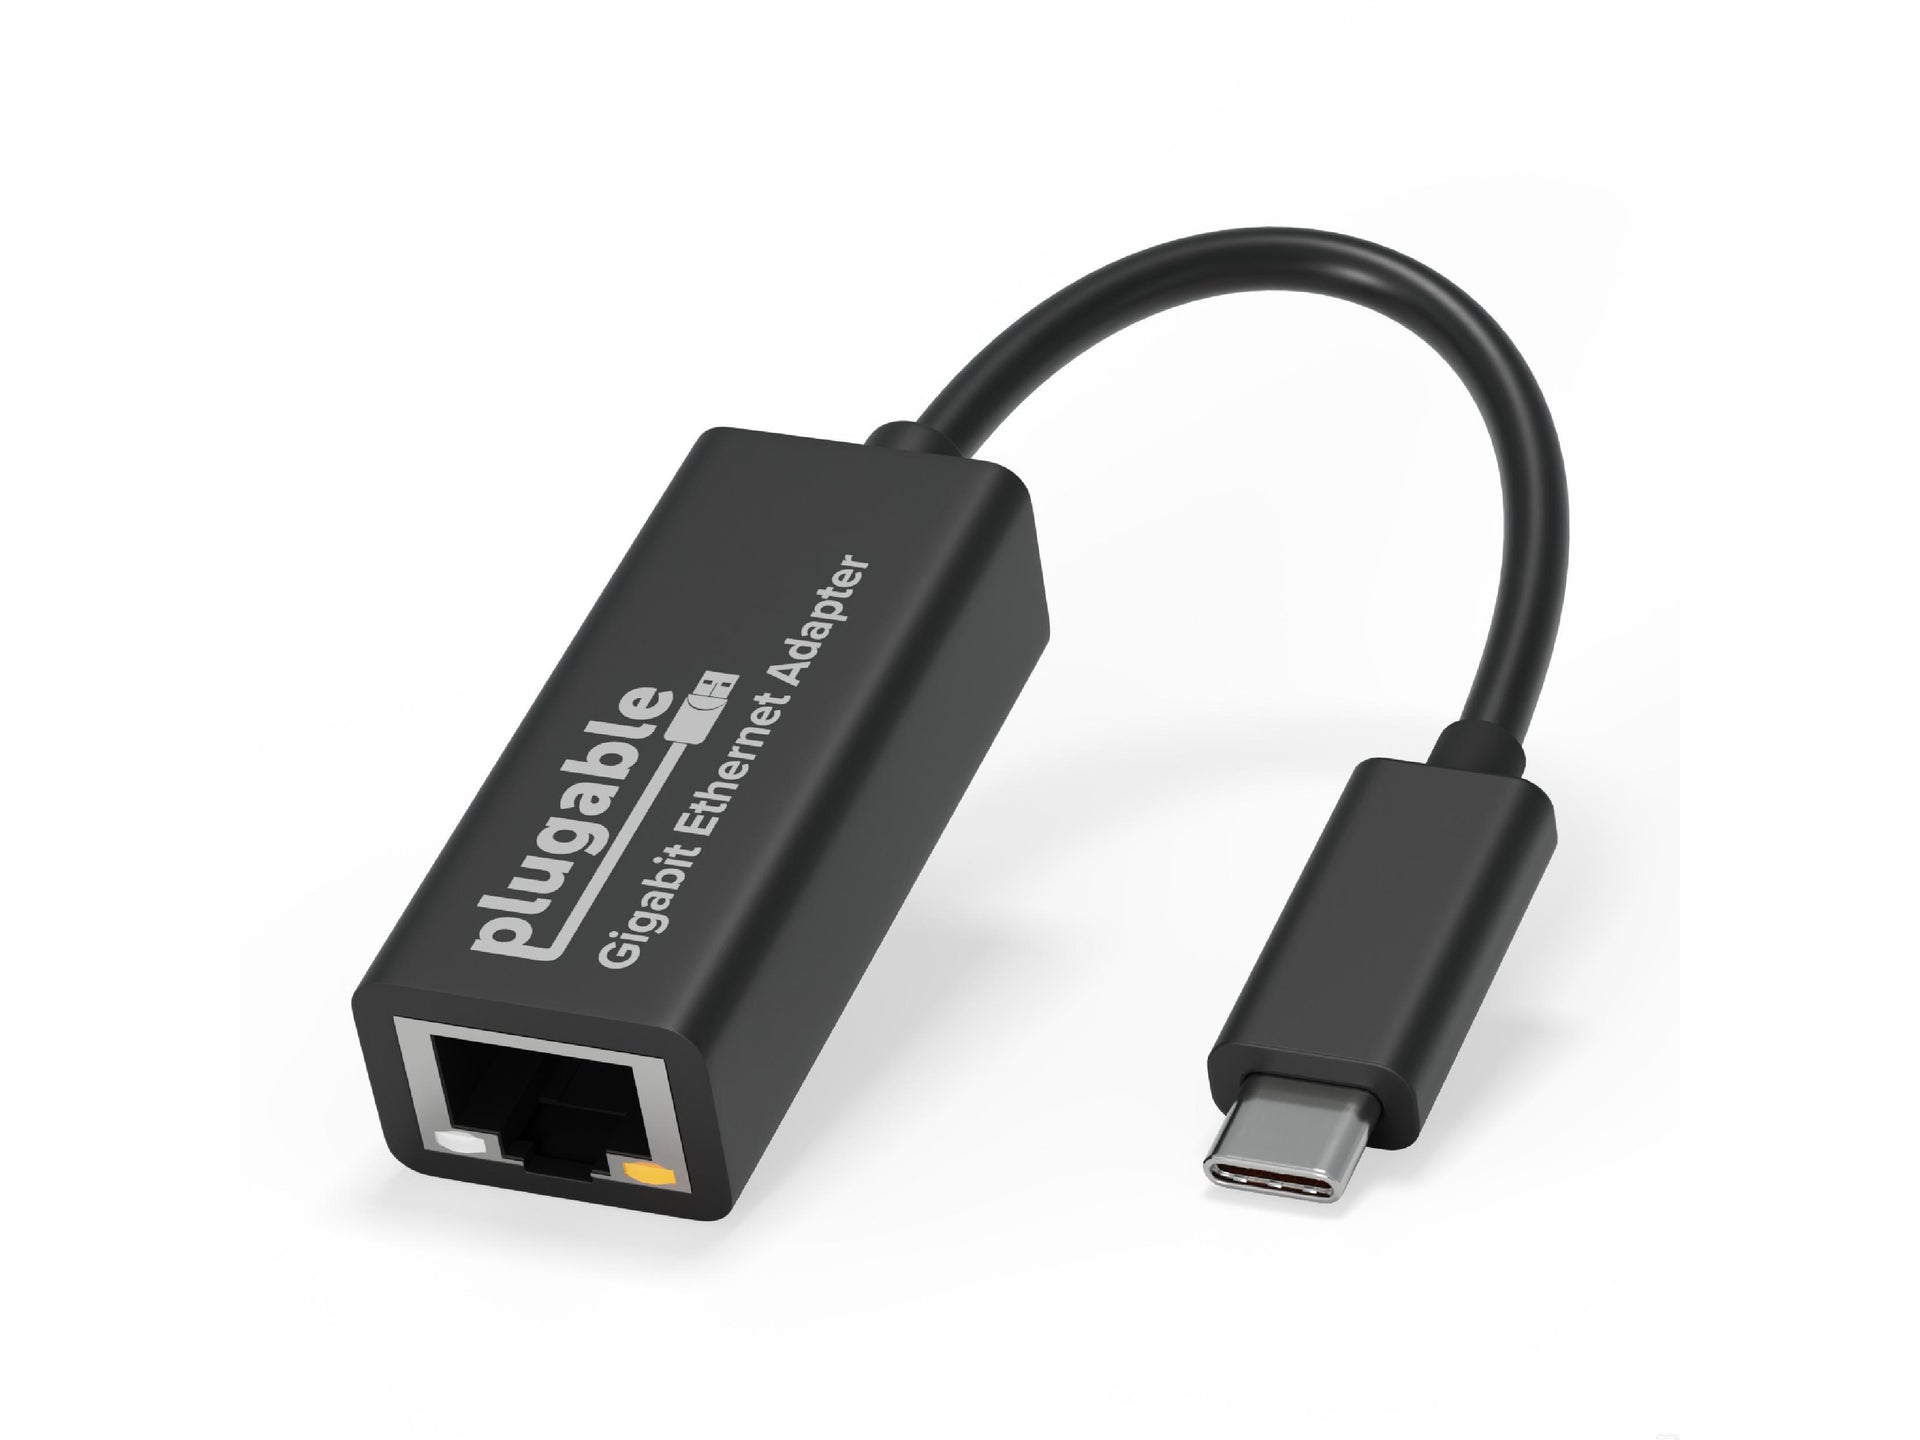 Plugable USB Type-C Gigabit Ethernet Adapter – Plugable